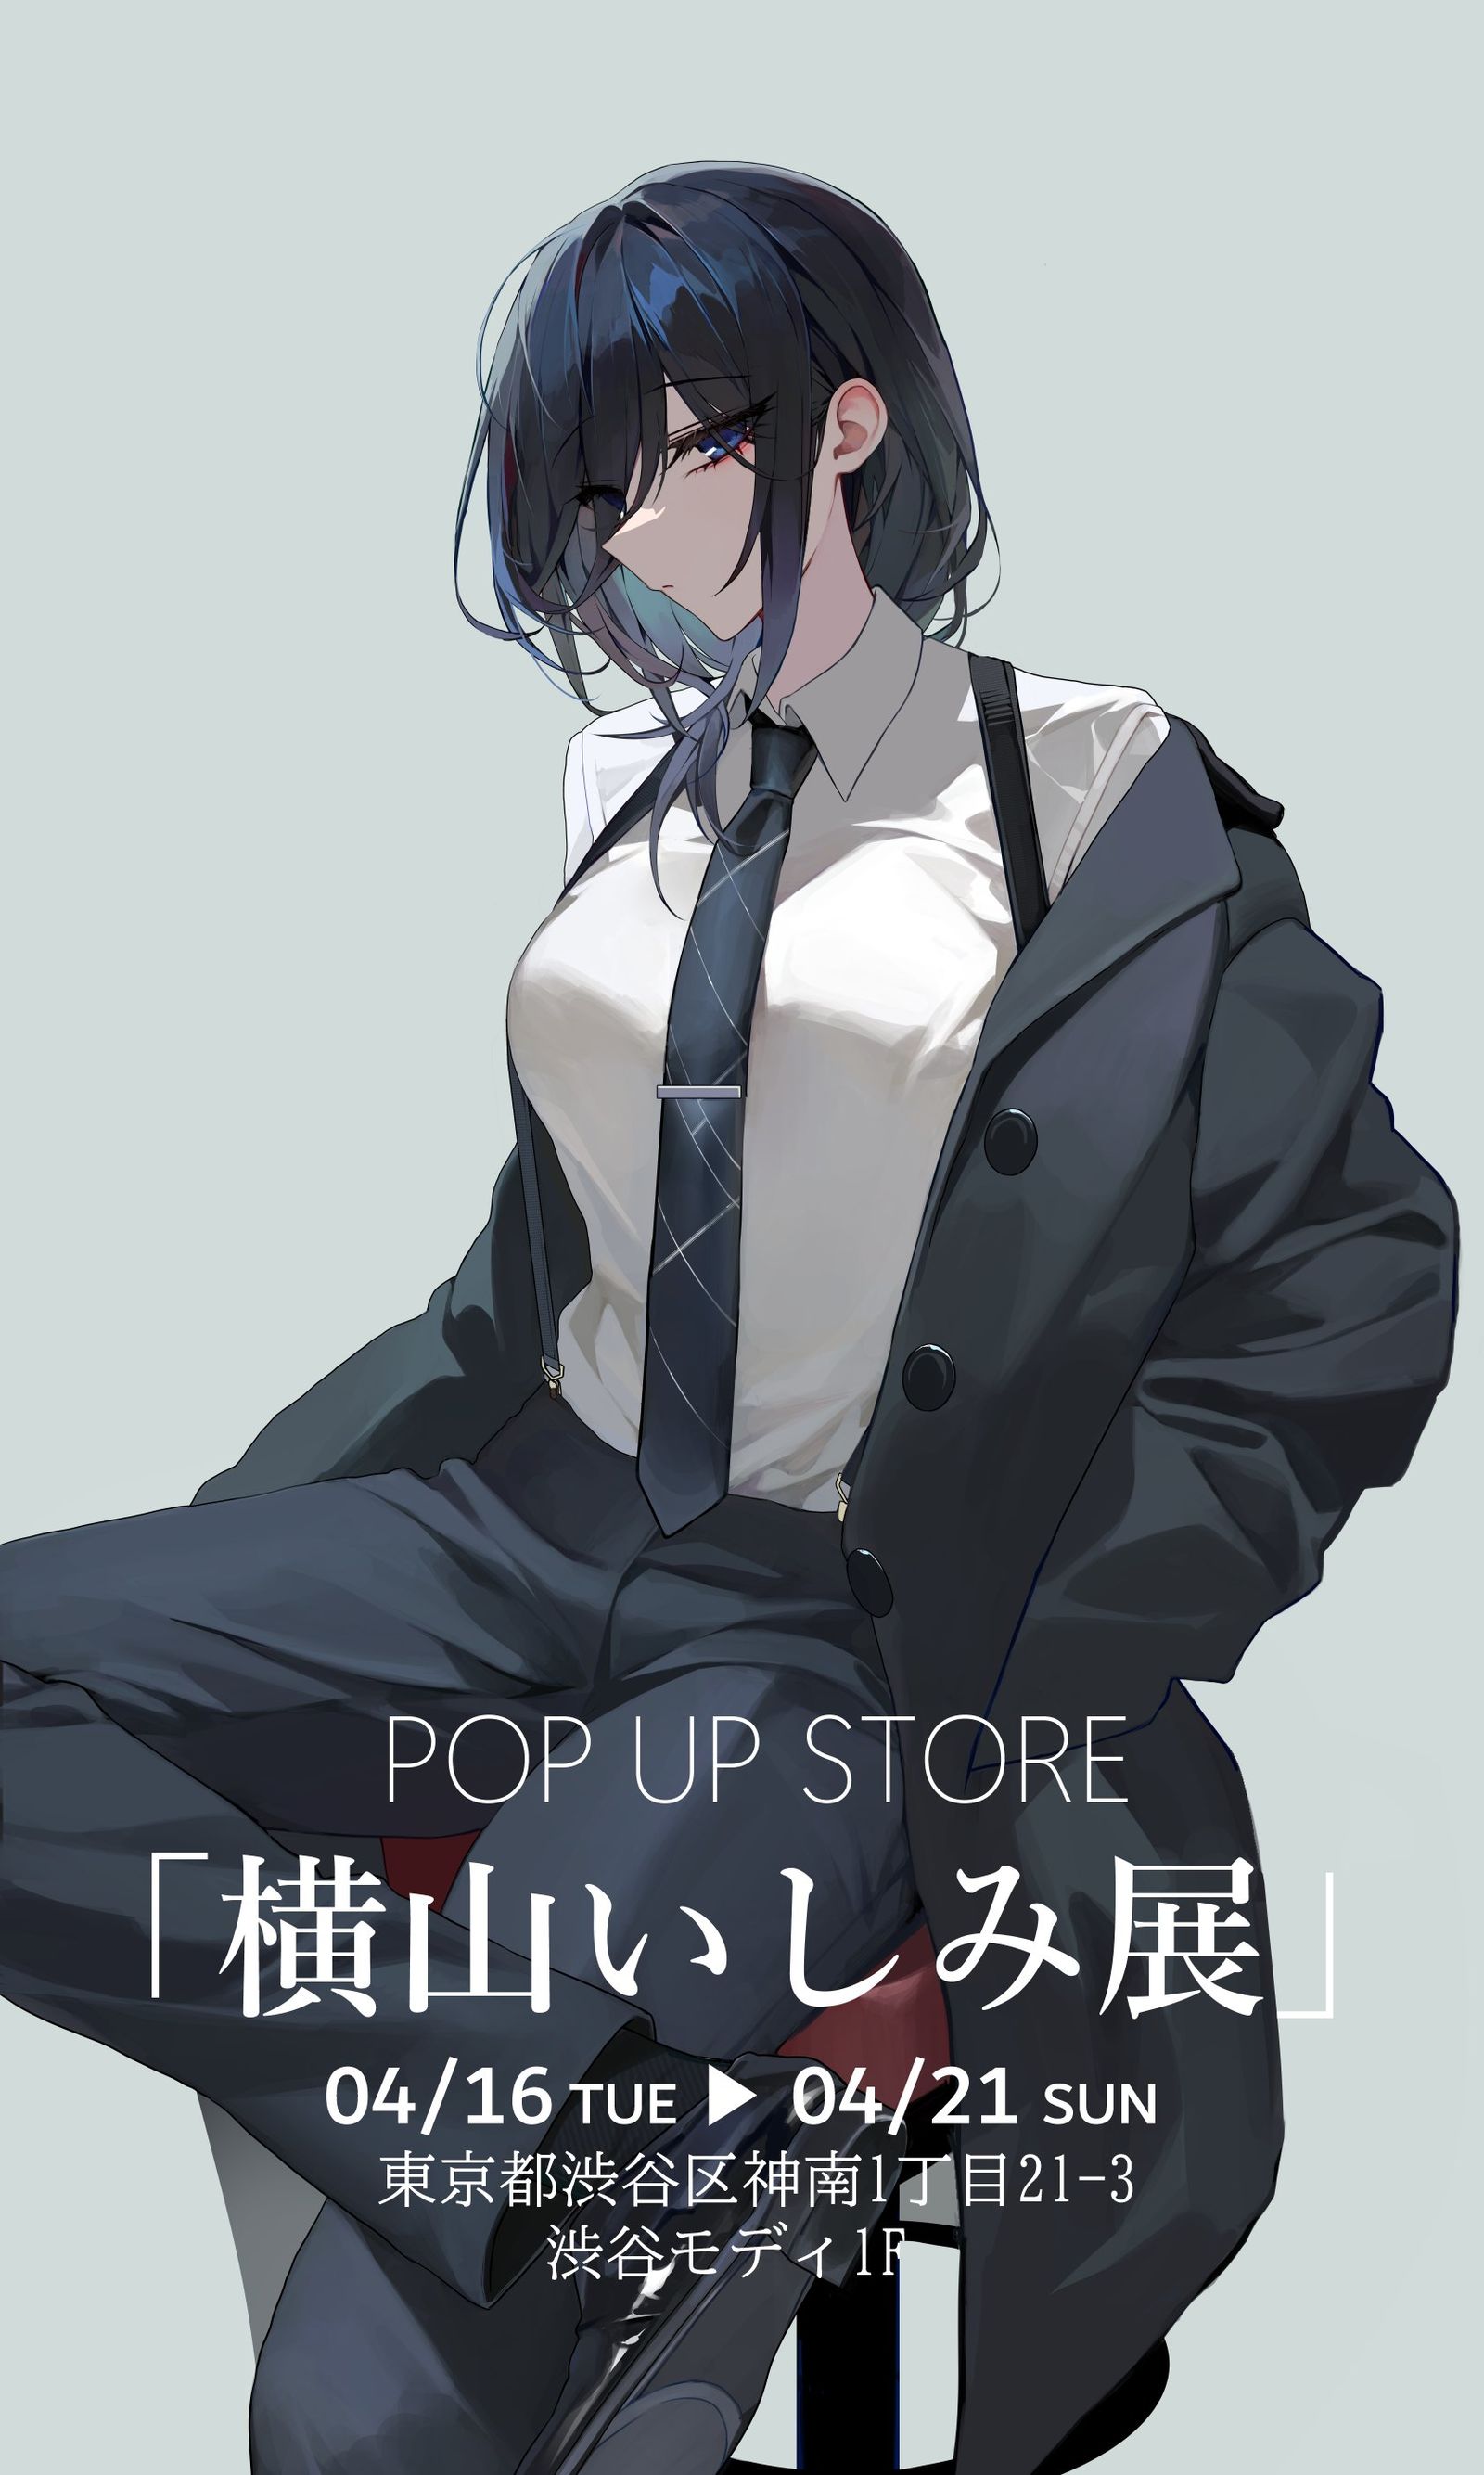 POP UP STORE“横山快乐展”插画图片壁纸